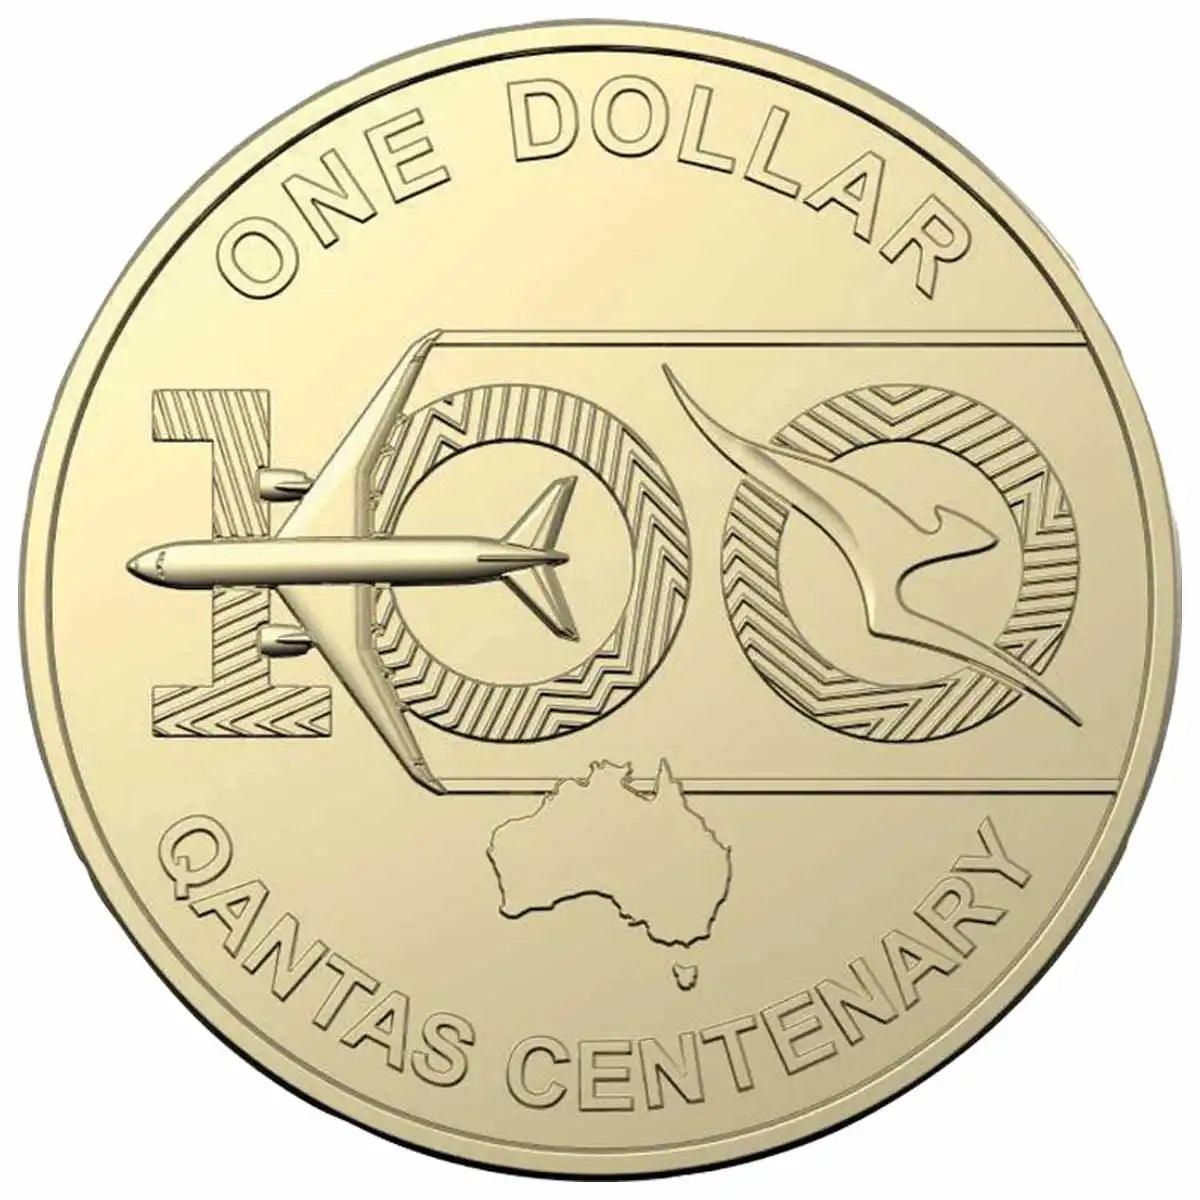 Qantas Centenary 2020 $1 Al-Br Coin Pack - Loose Change Coins